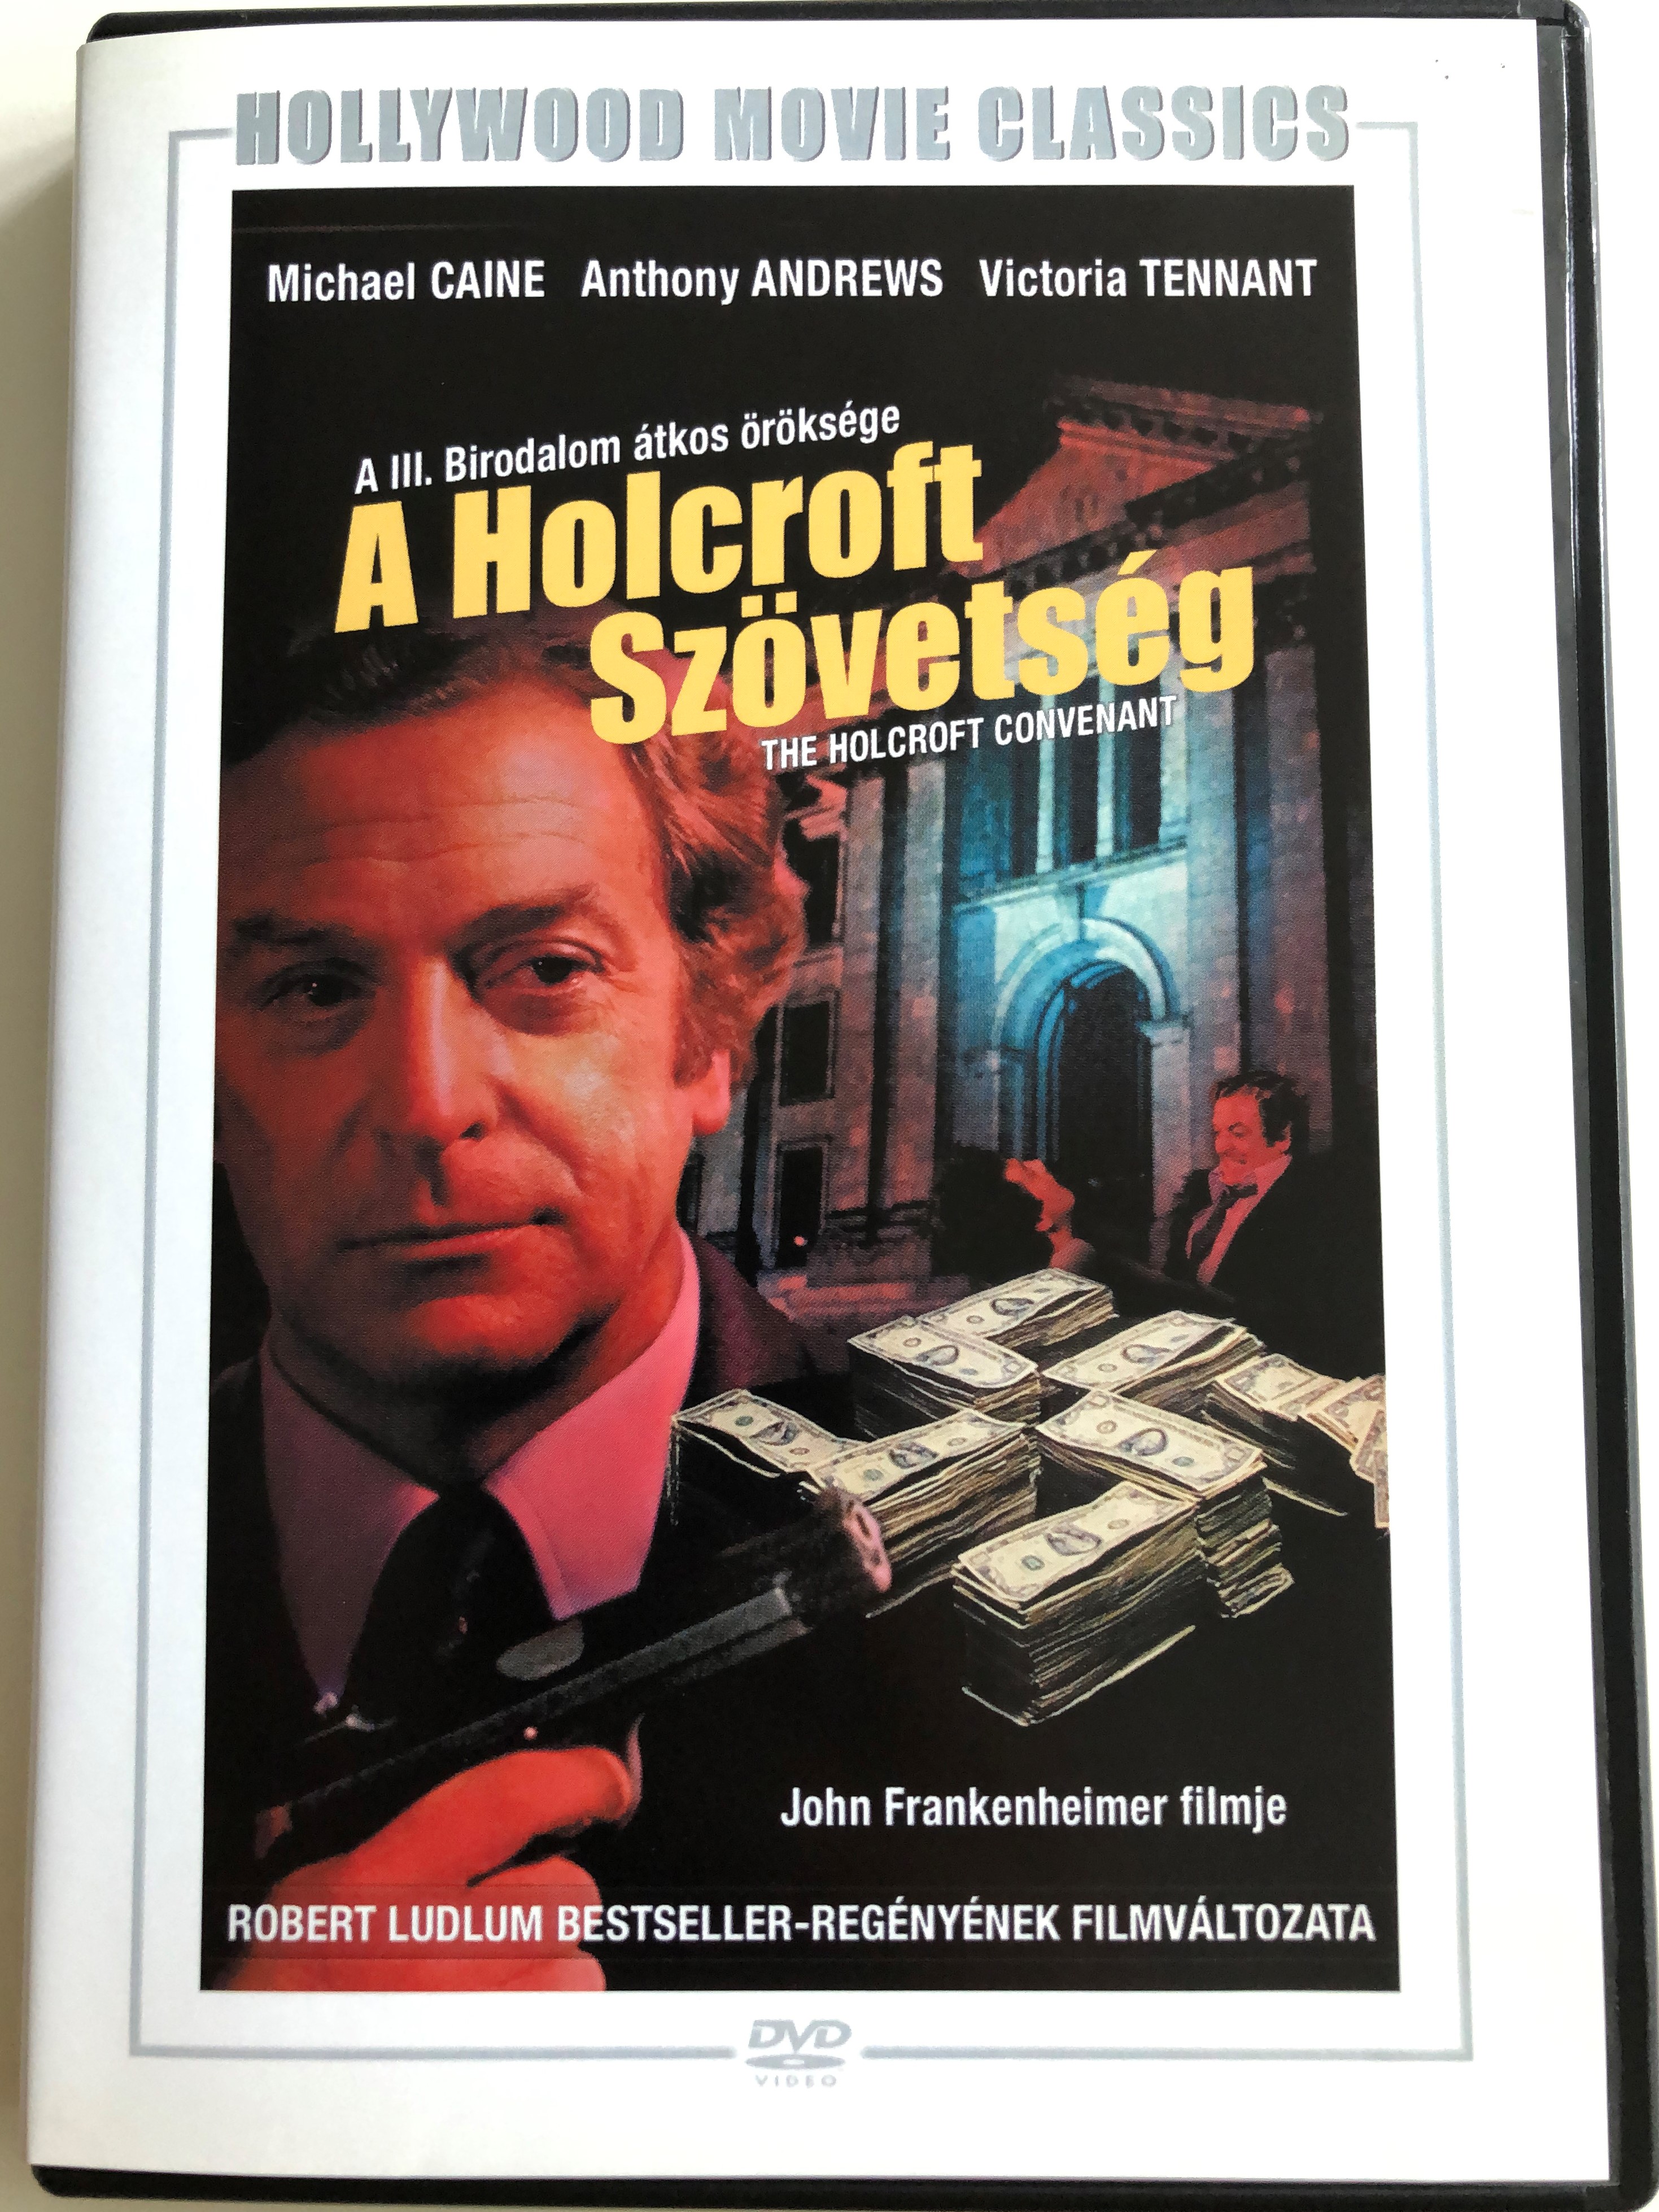 the-holcroft-covenant-dvd-1985-a-holcroft-sz-vets-g-directed-by-john-frankenheimer-starring-michael-caine-anthony-andrews-victoria-tennant-1-.jpg